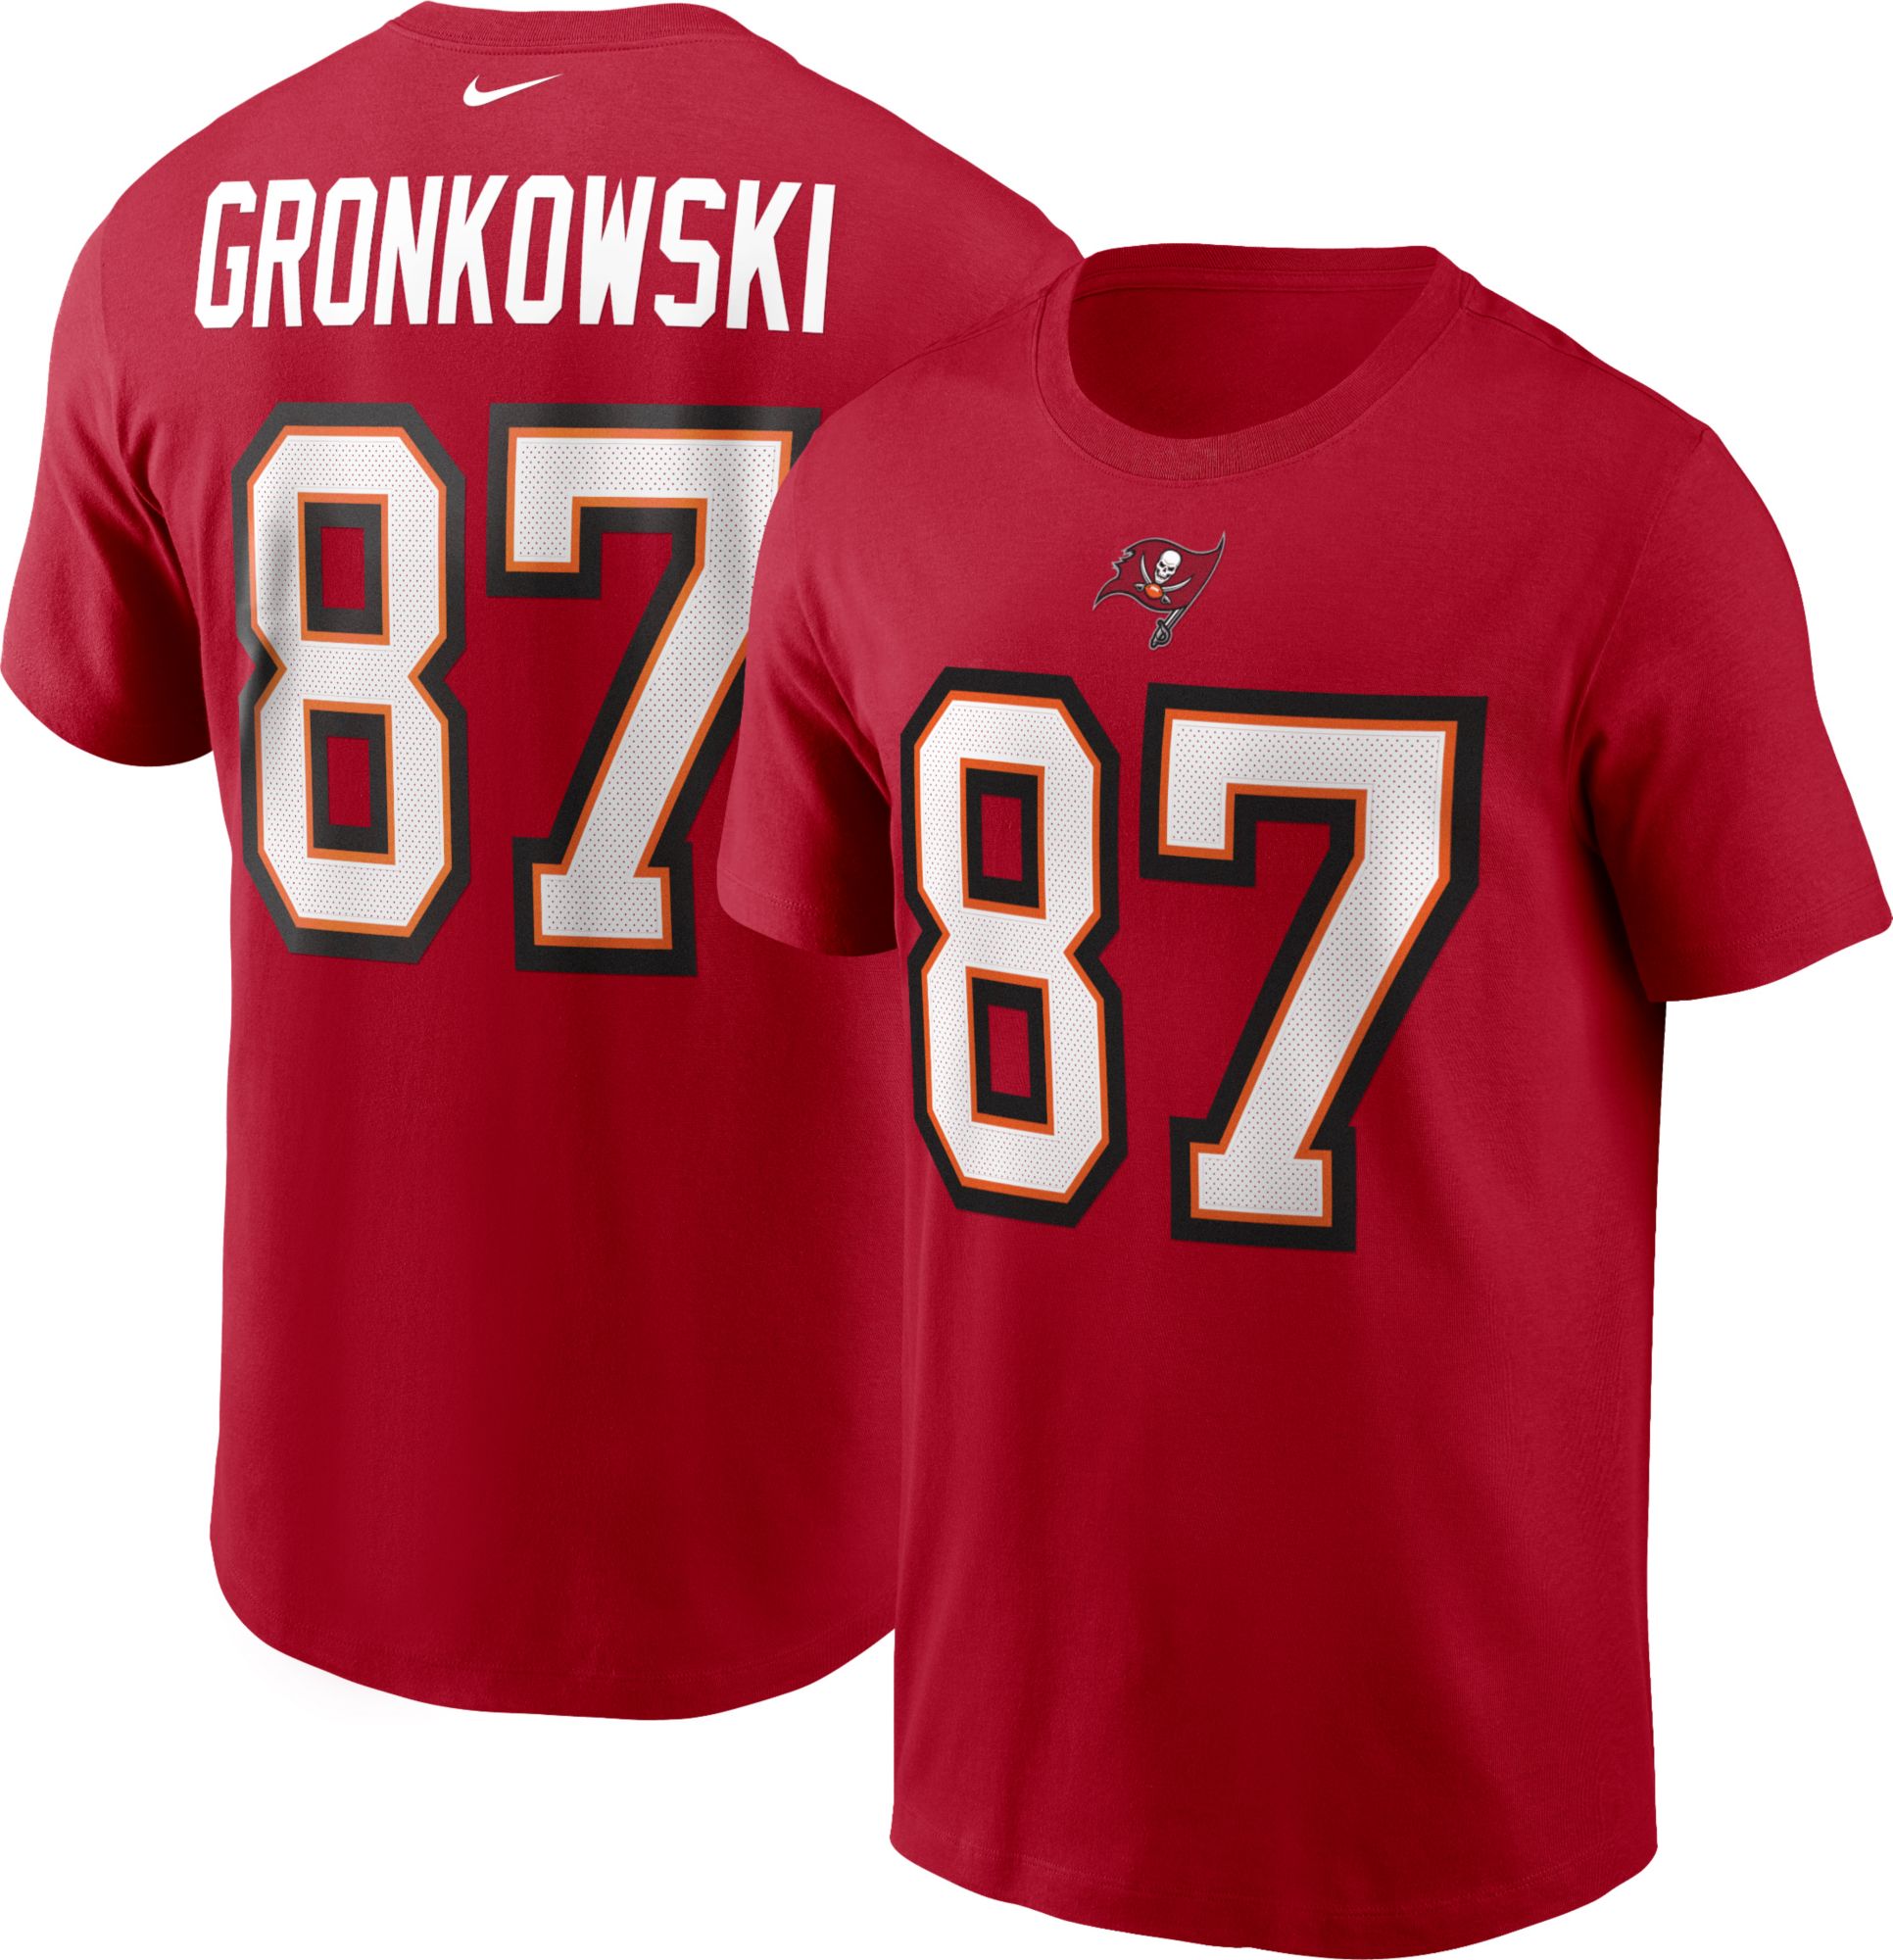 rob gronkowski jersey shirt